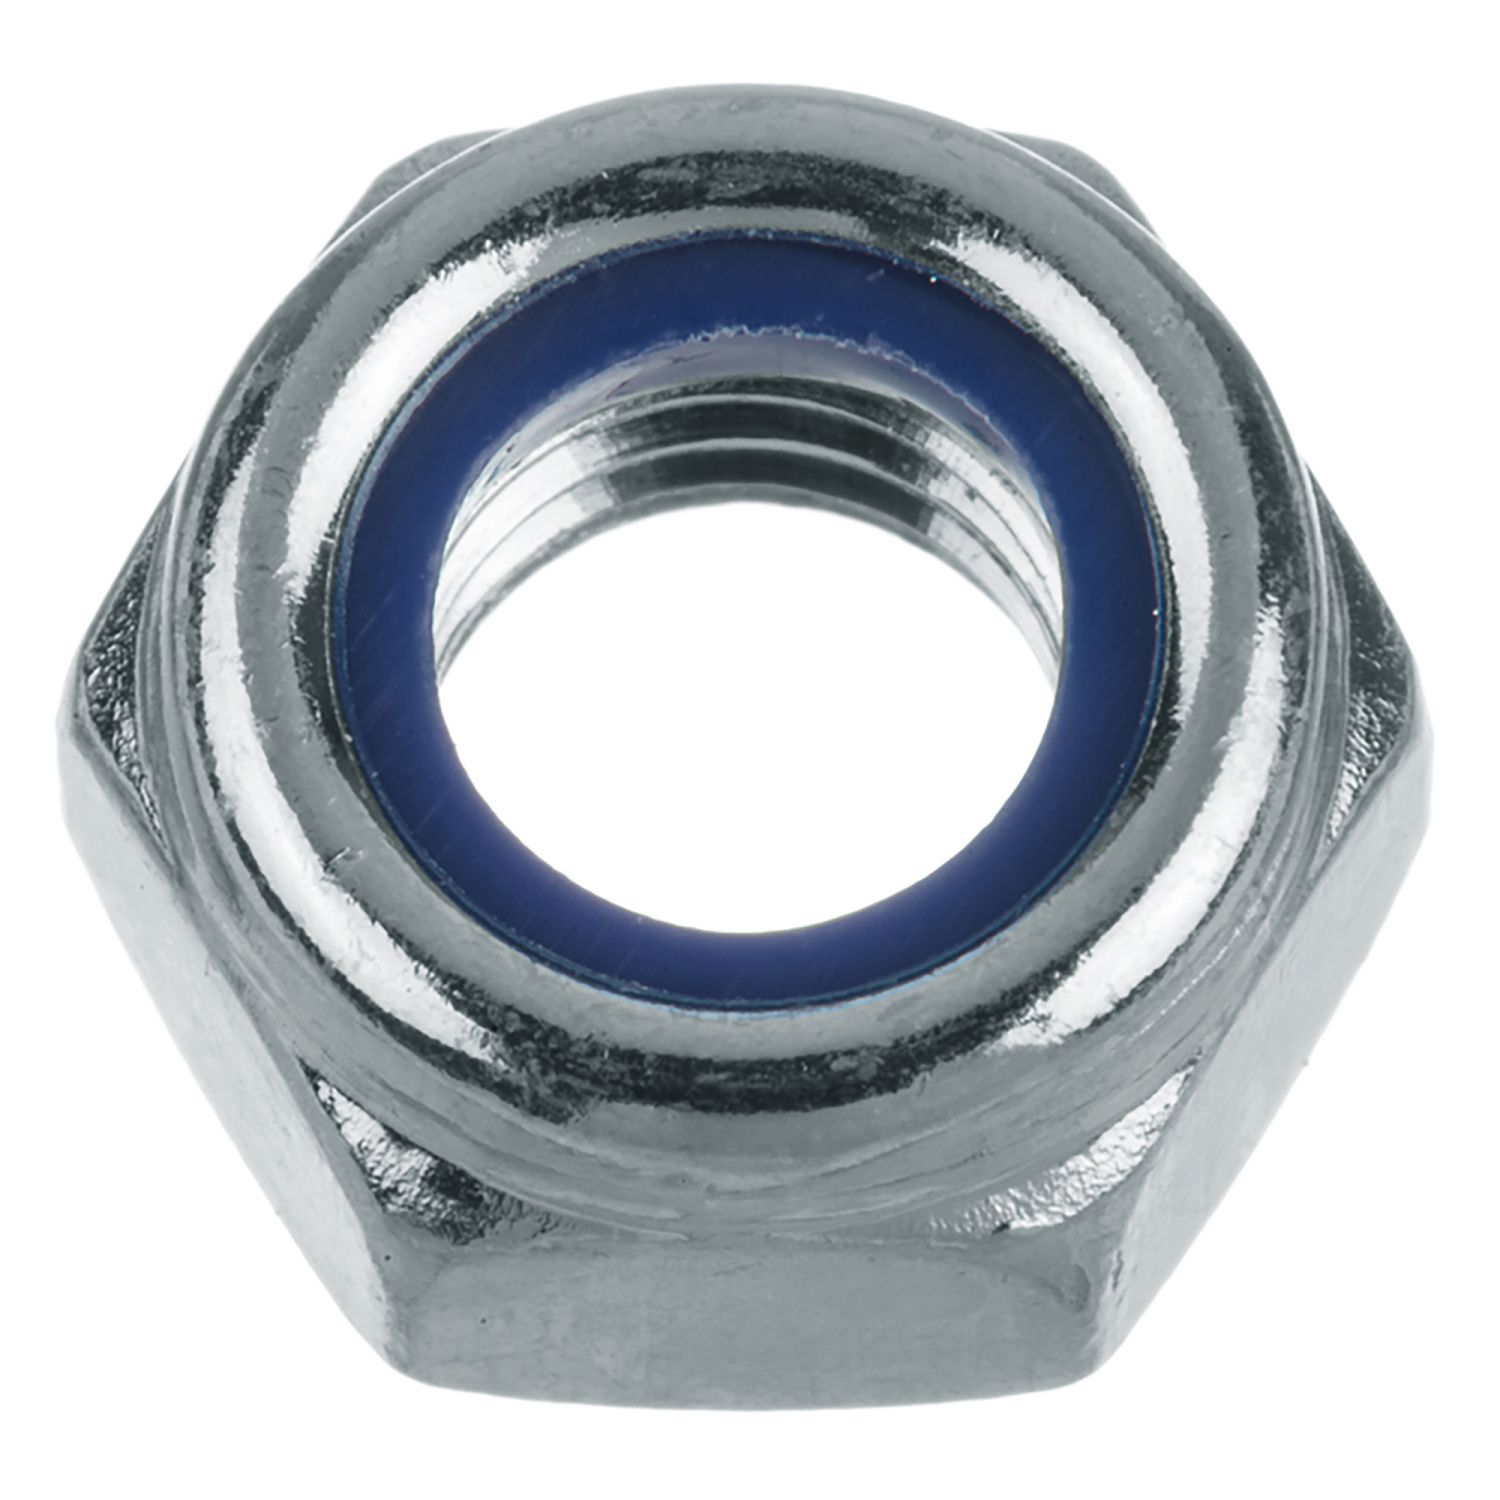 MixOne. гайка со стопорным кольцом М12, оцинкованная, DIN 985, 1 шт.